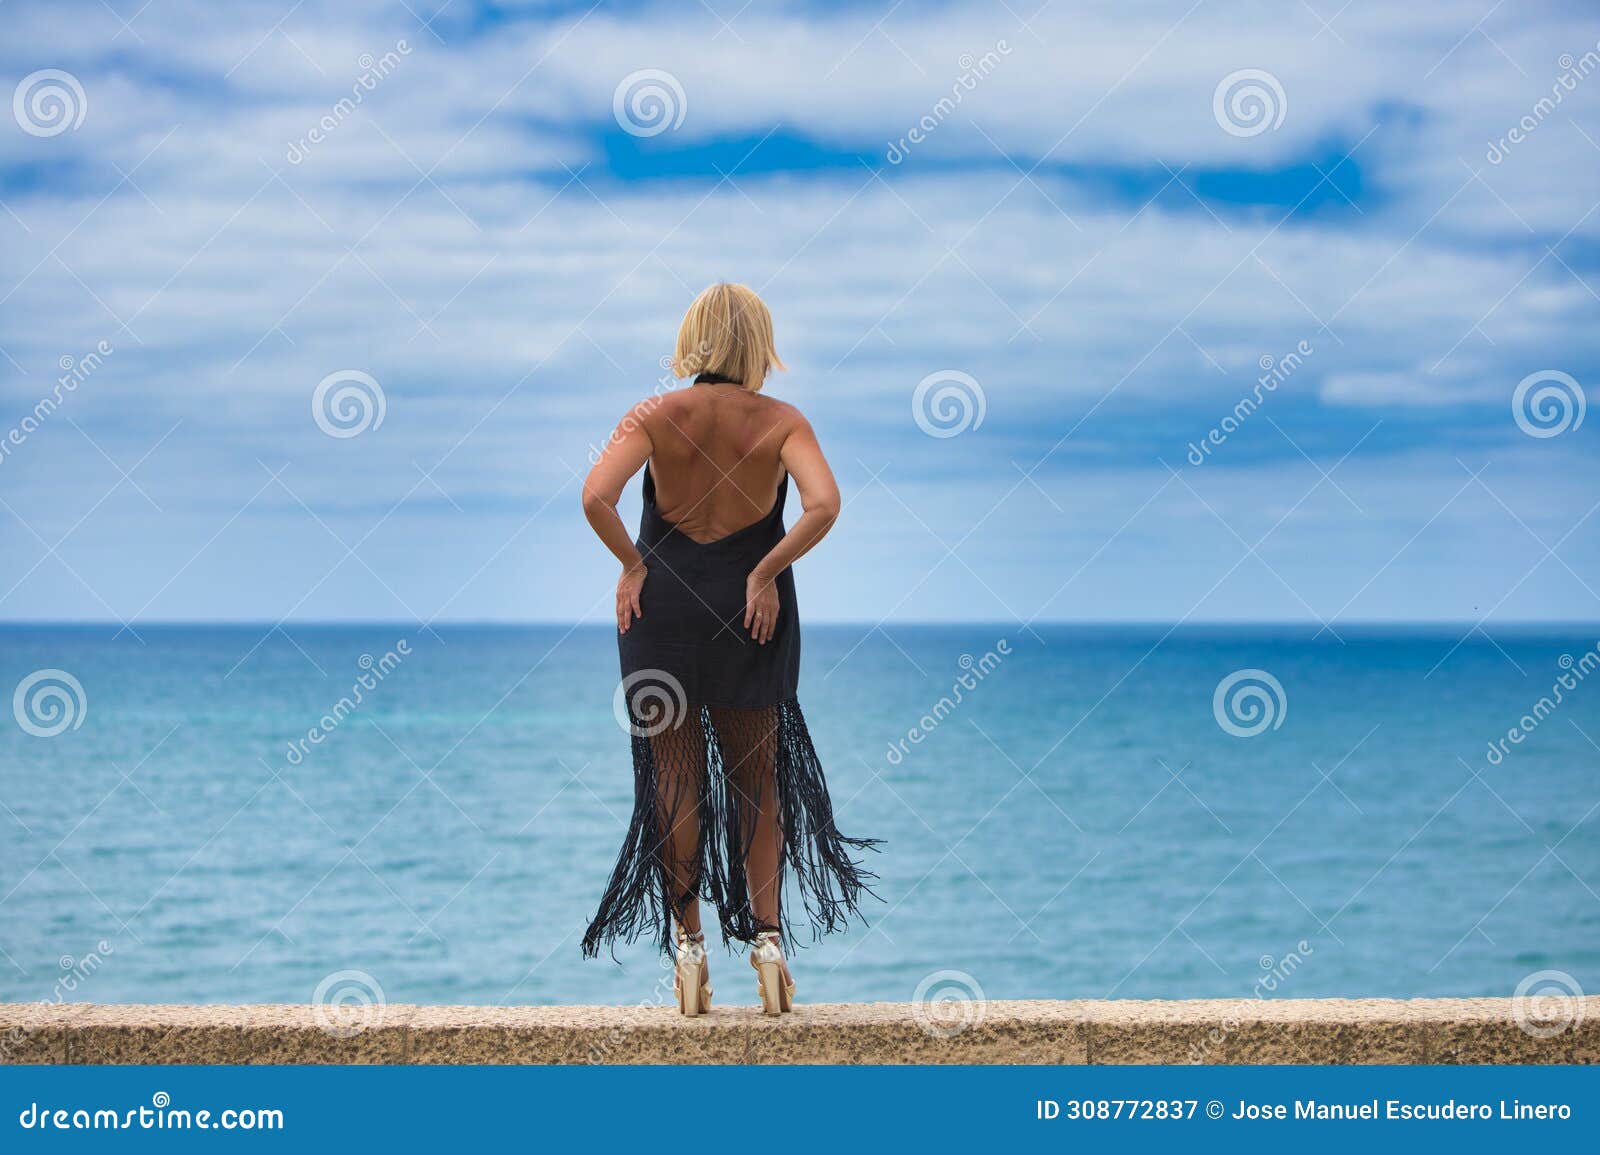 mature, blonde, beautiful woman wearing an elegant black dress gazes longingly at the horizon over the atlantic ocean in cadiz,